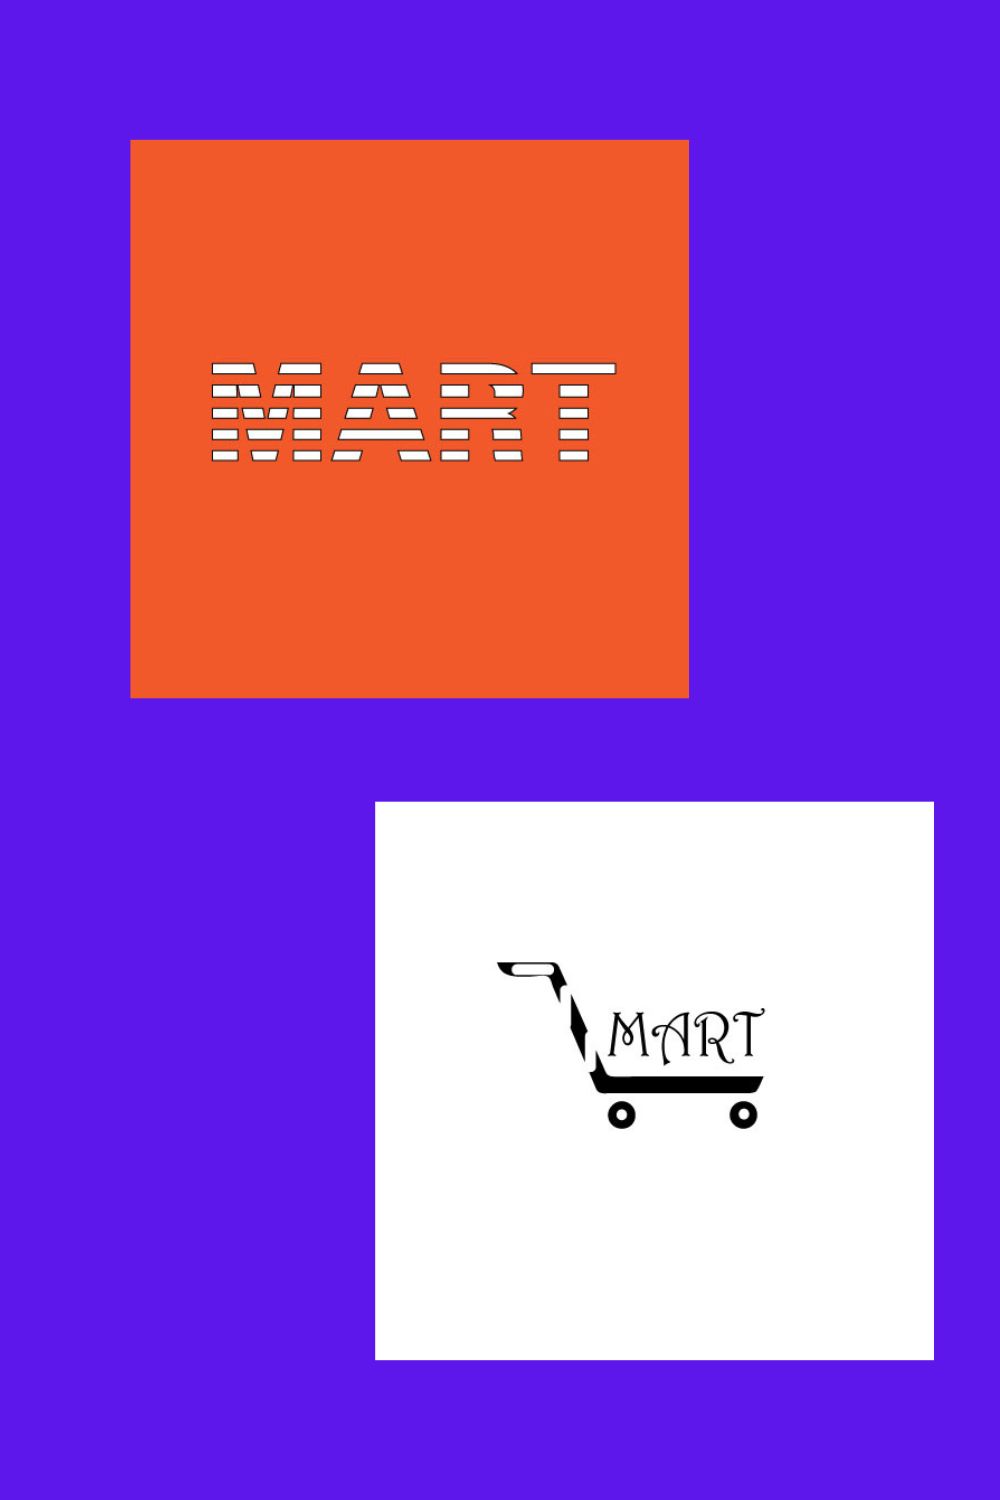 Minimalist Mart Logo pinterest image.